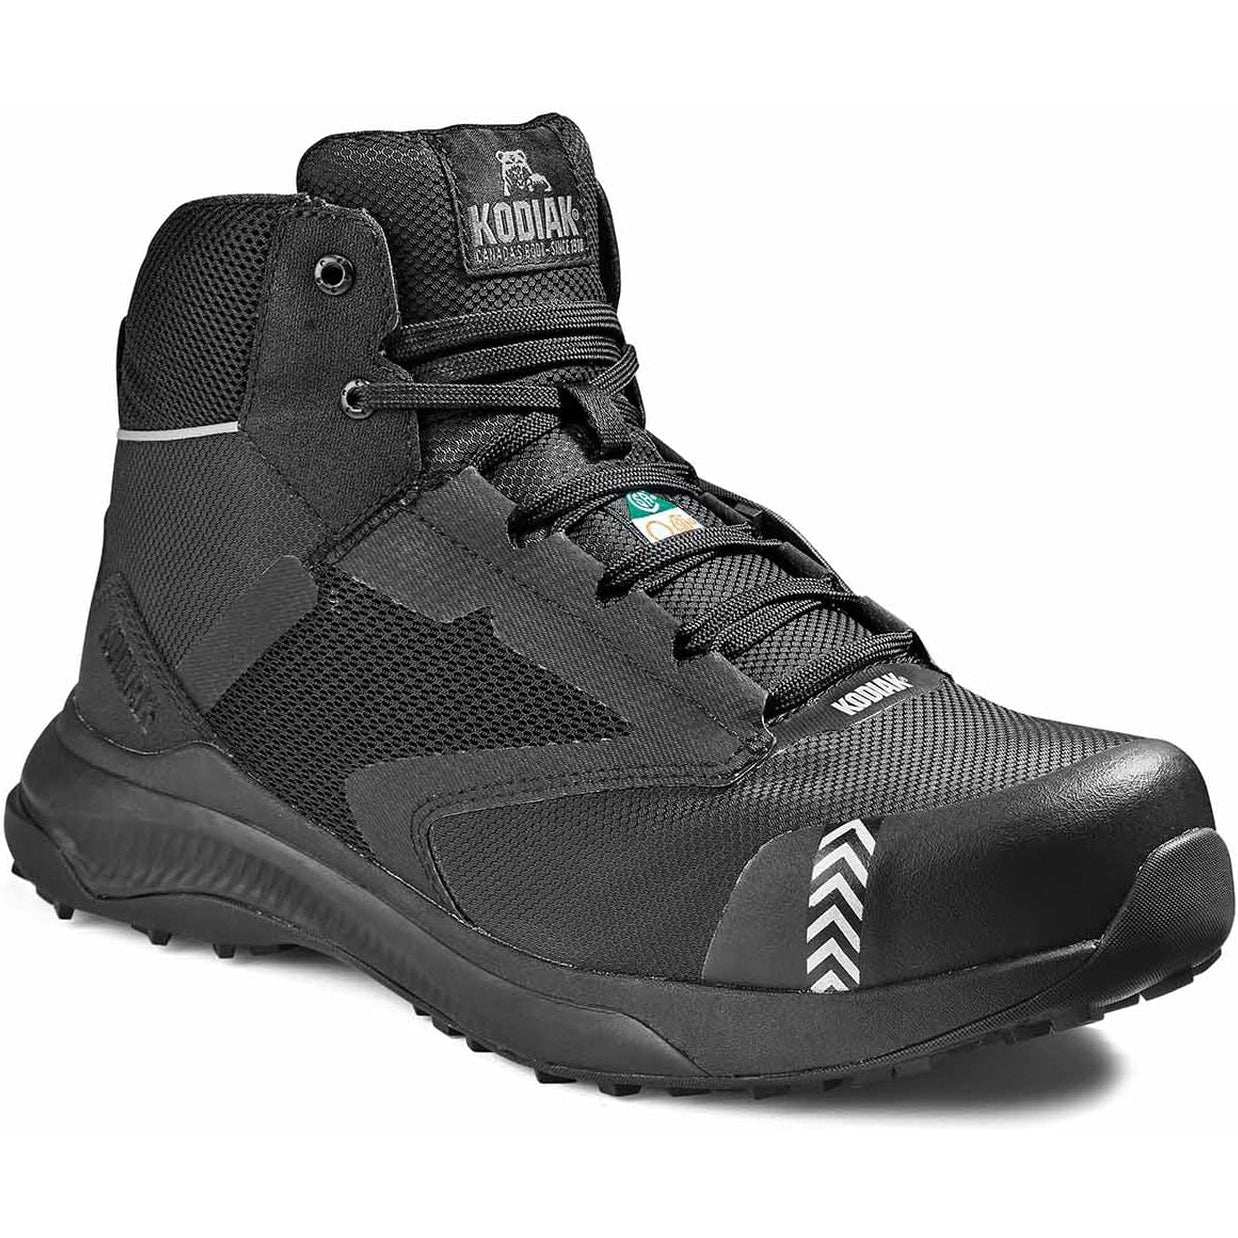 Kodiak Men's Quicktrail Mid CT Athletic Safety Work Shoe -Black- 4THQBK 7 / Wide / Black - Overlook Boots